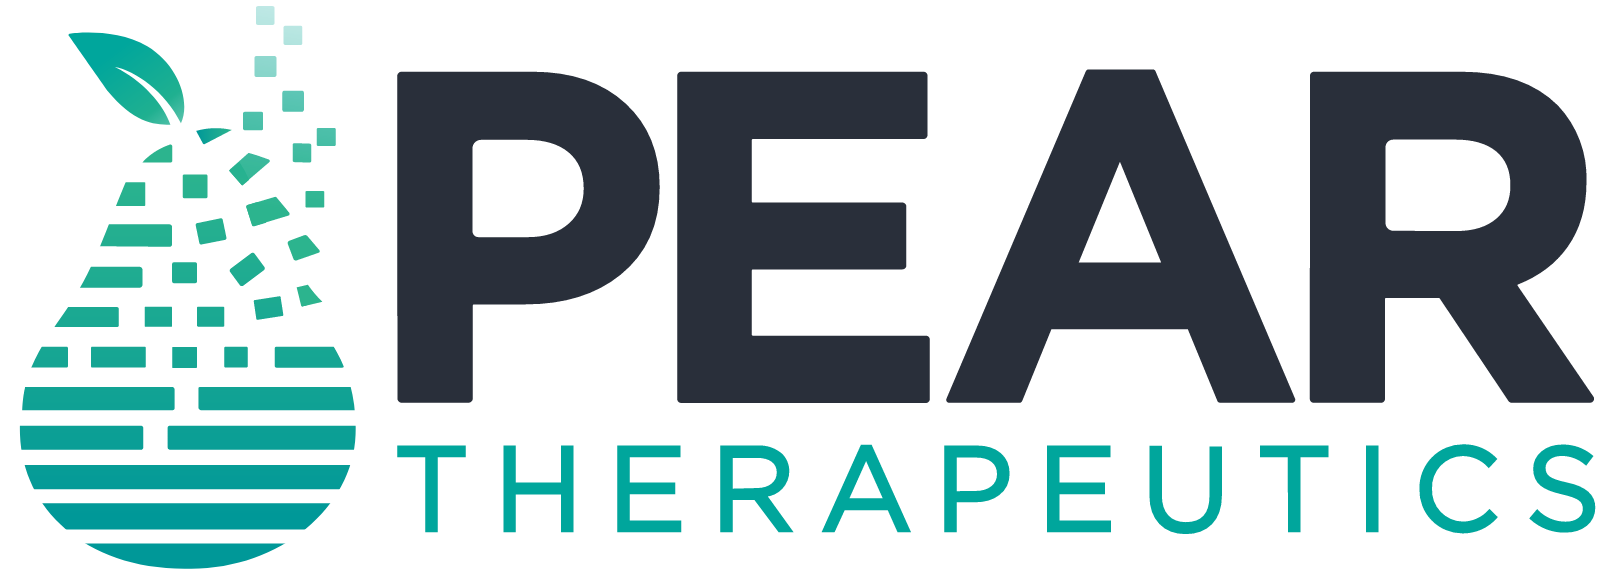 Pear Therapeutics logo large (transparent PNG)